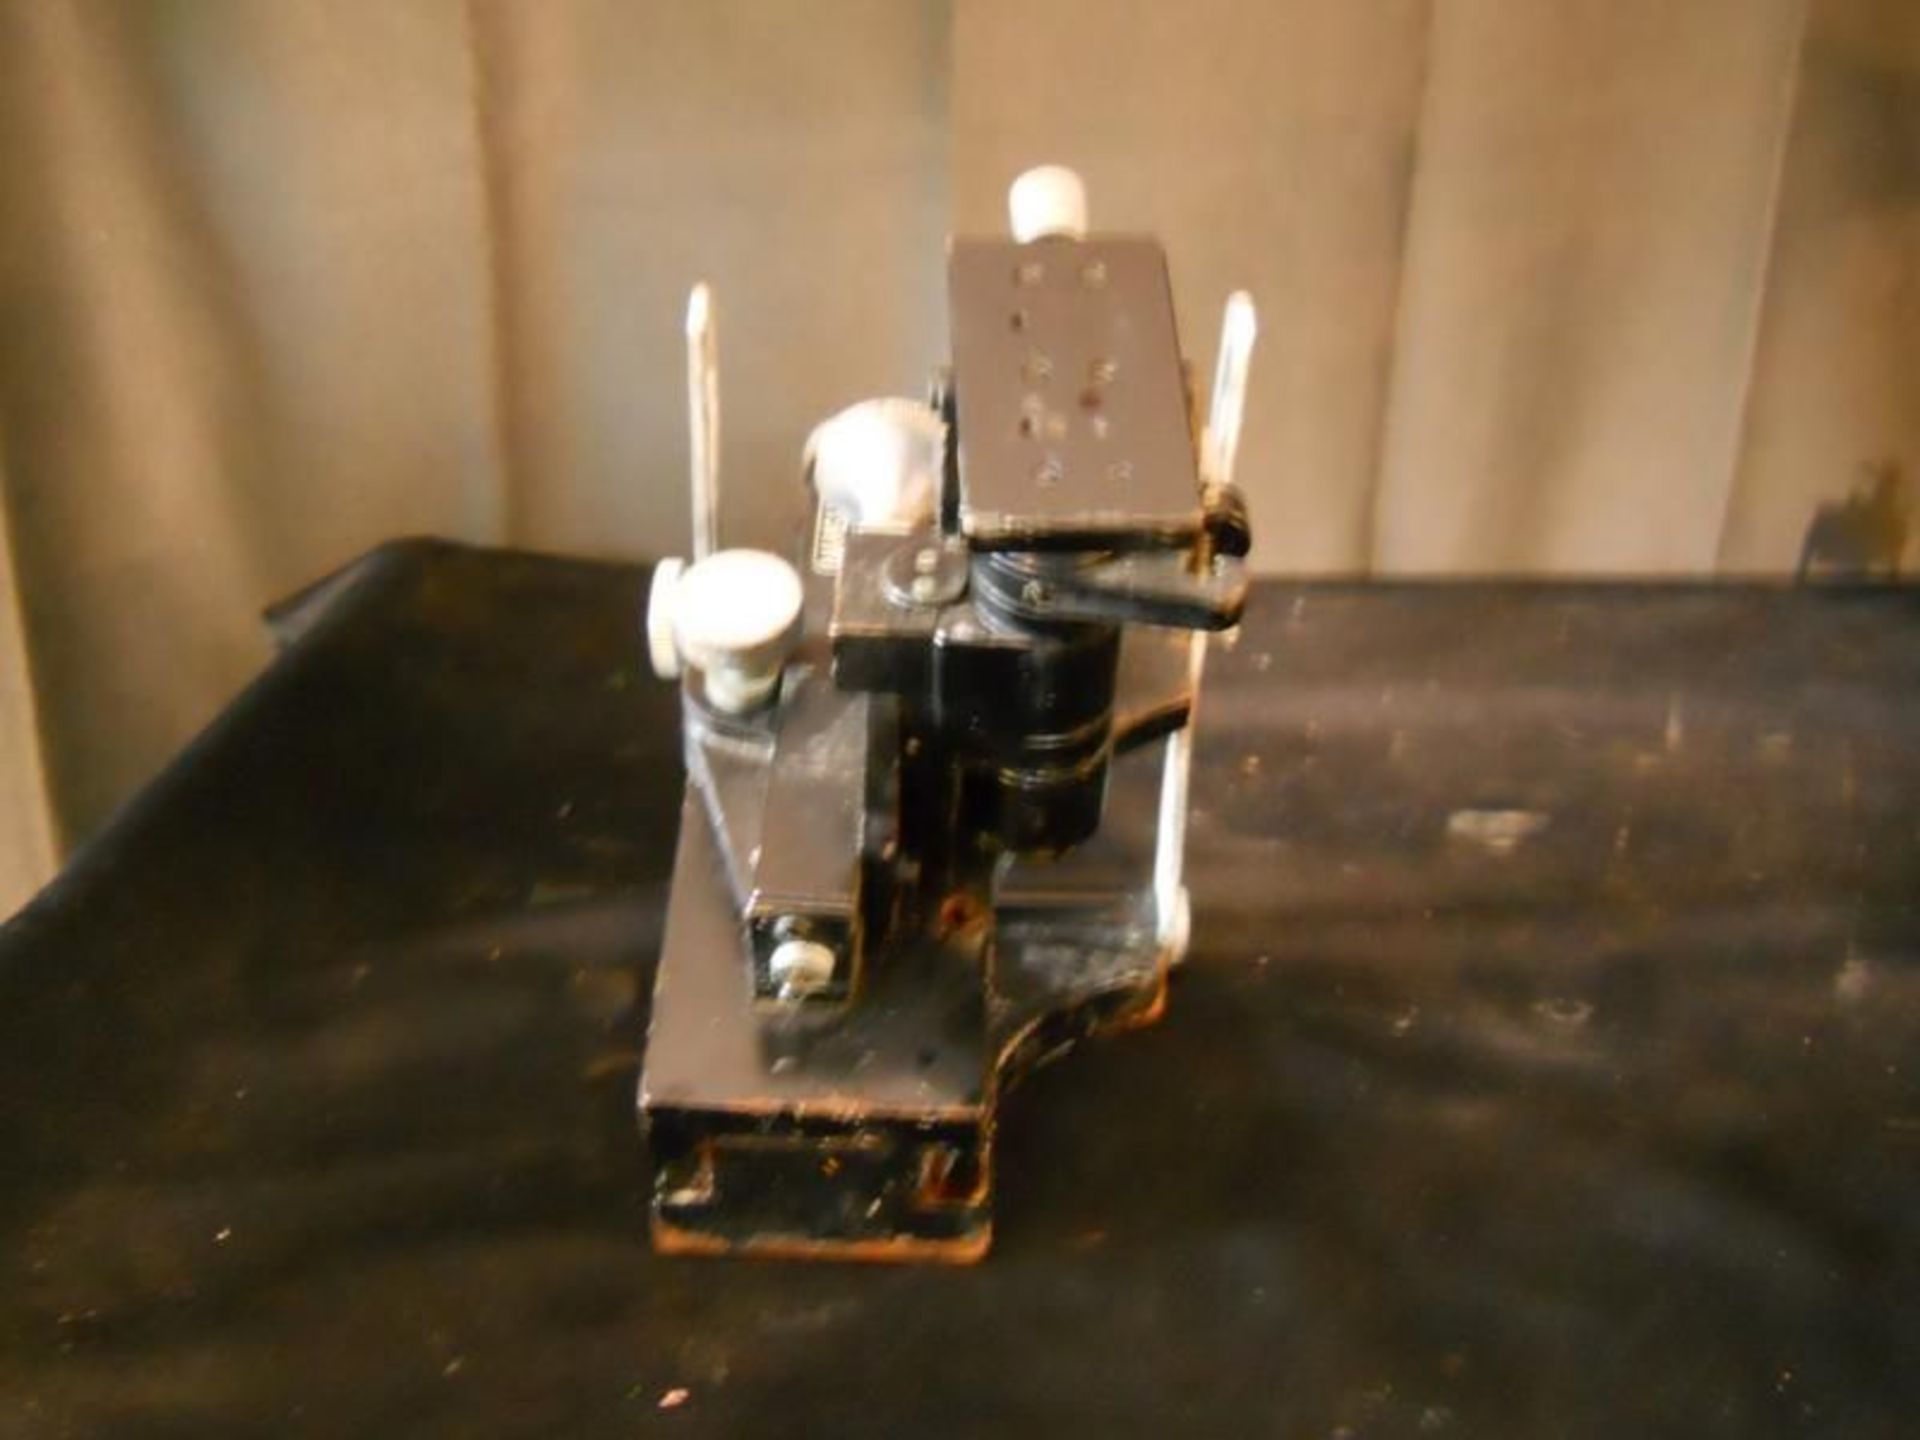 Lot of 6 Narishige Micro Manipulators (For Parts), Qty 1, 321981750676 - Image 4 of 25